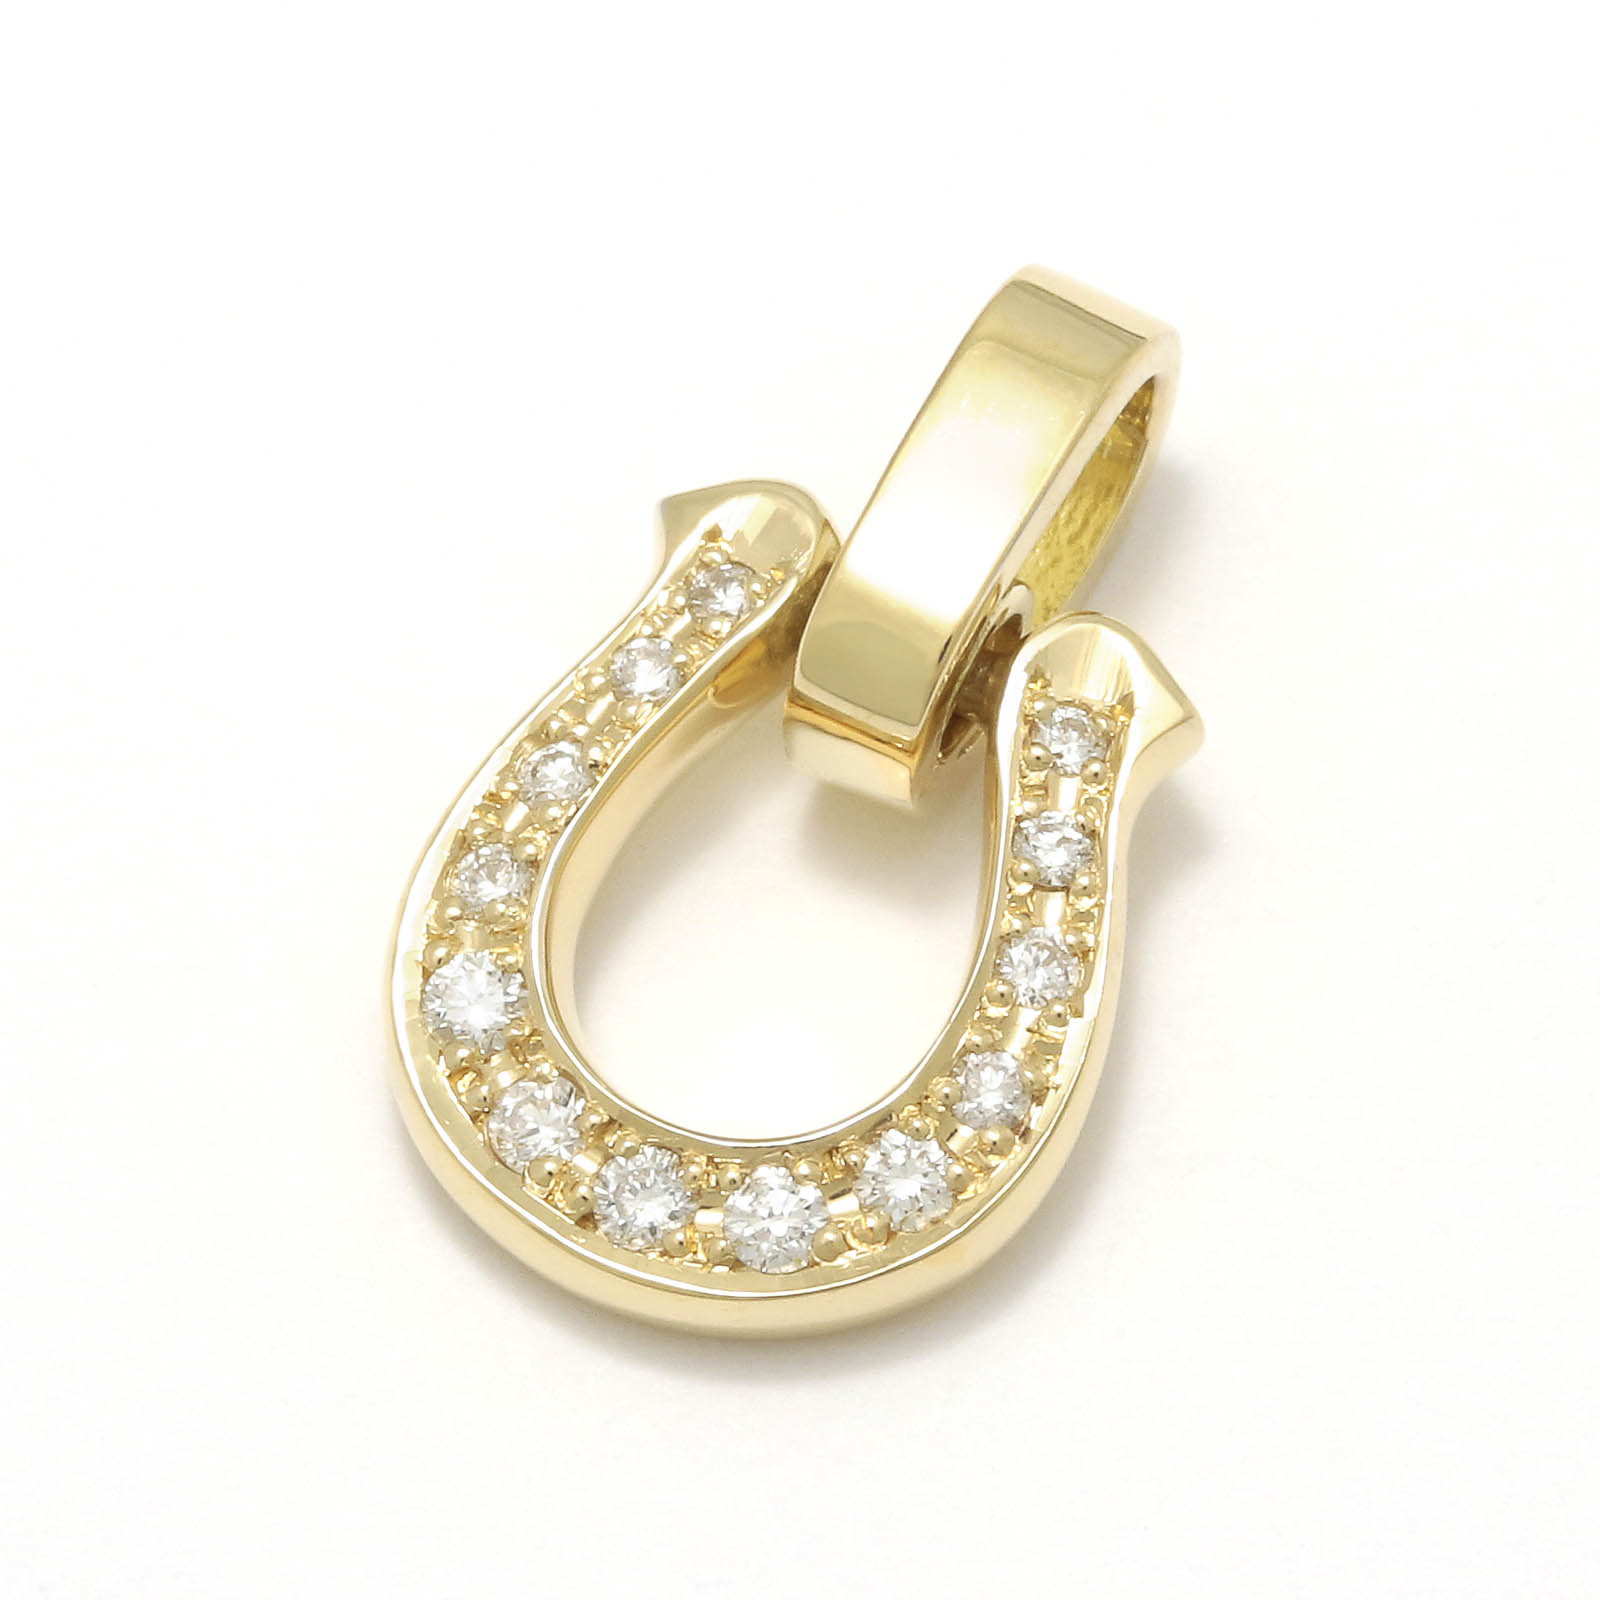 Horseshoe Amulet - K18Yellow Gold w/Diamond